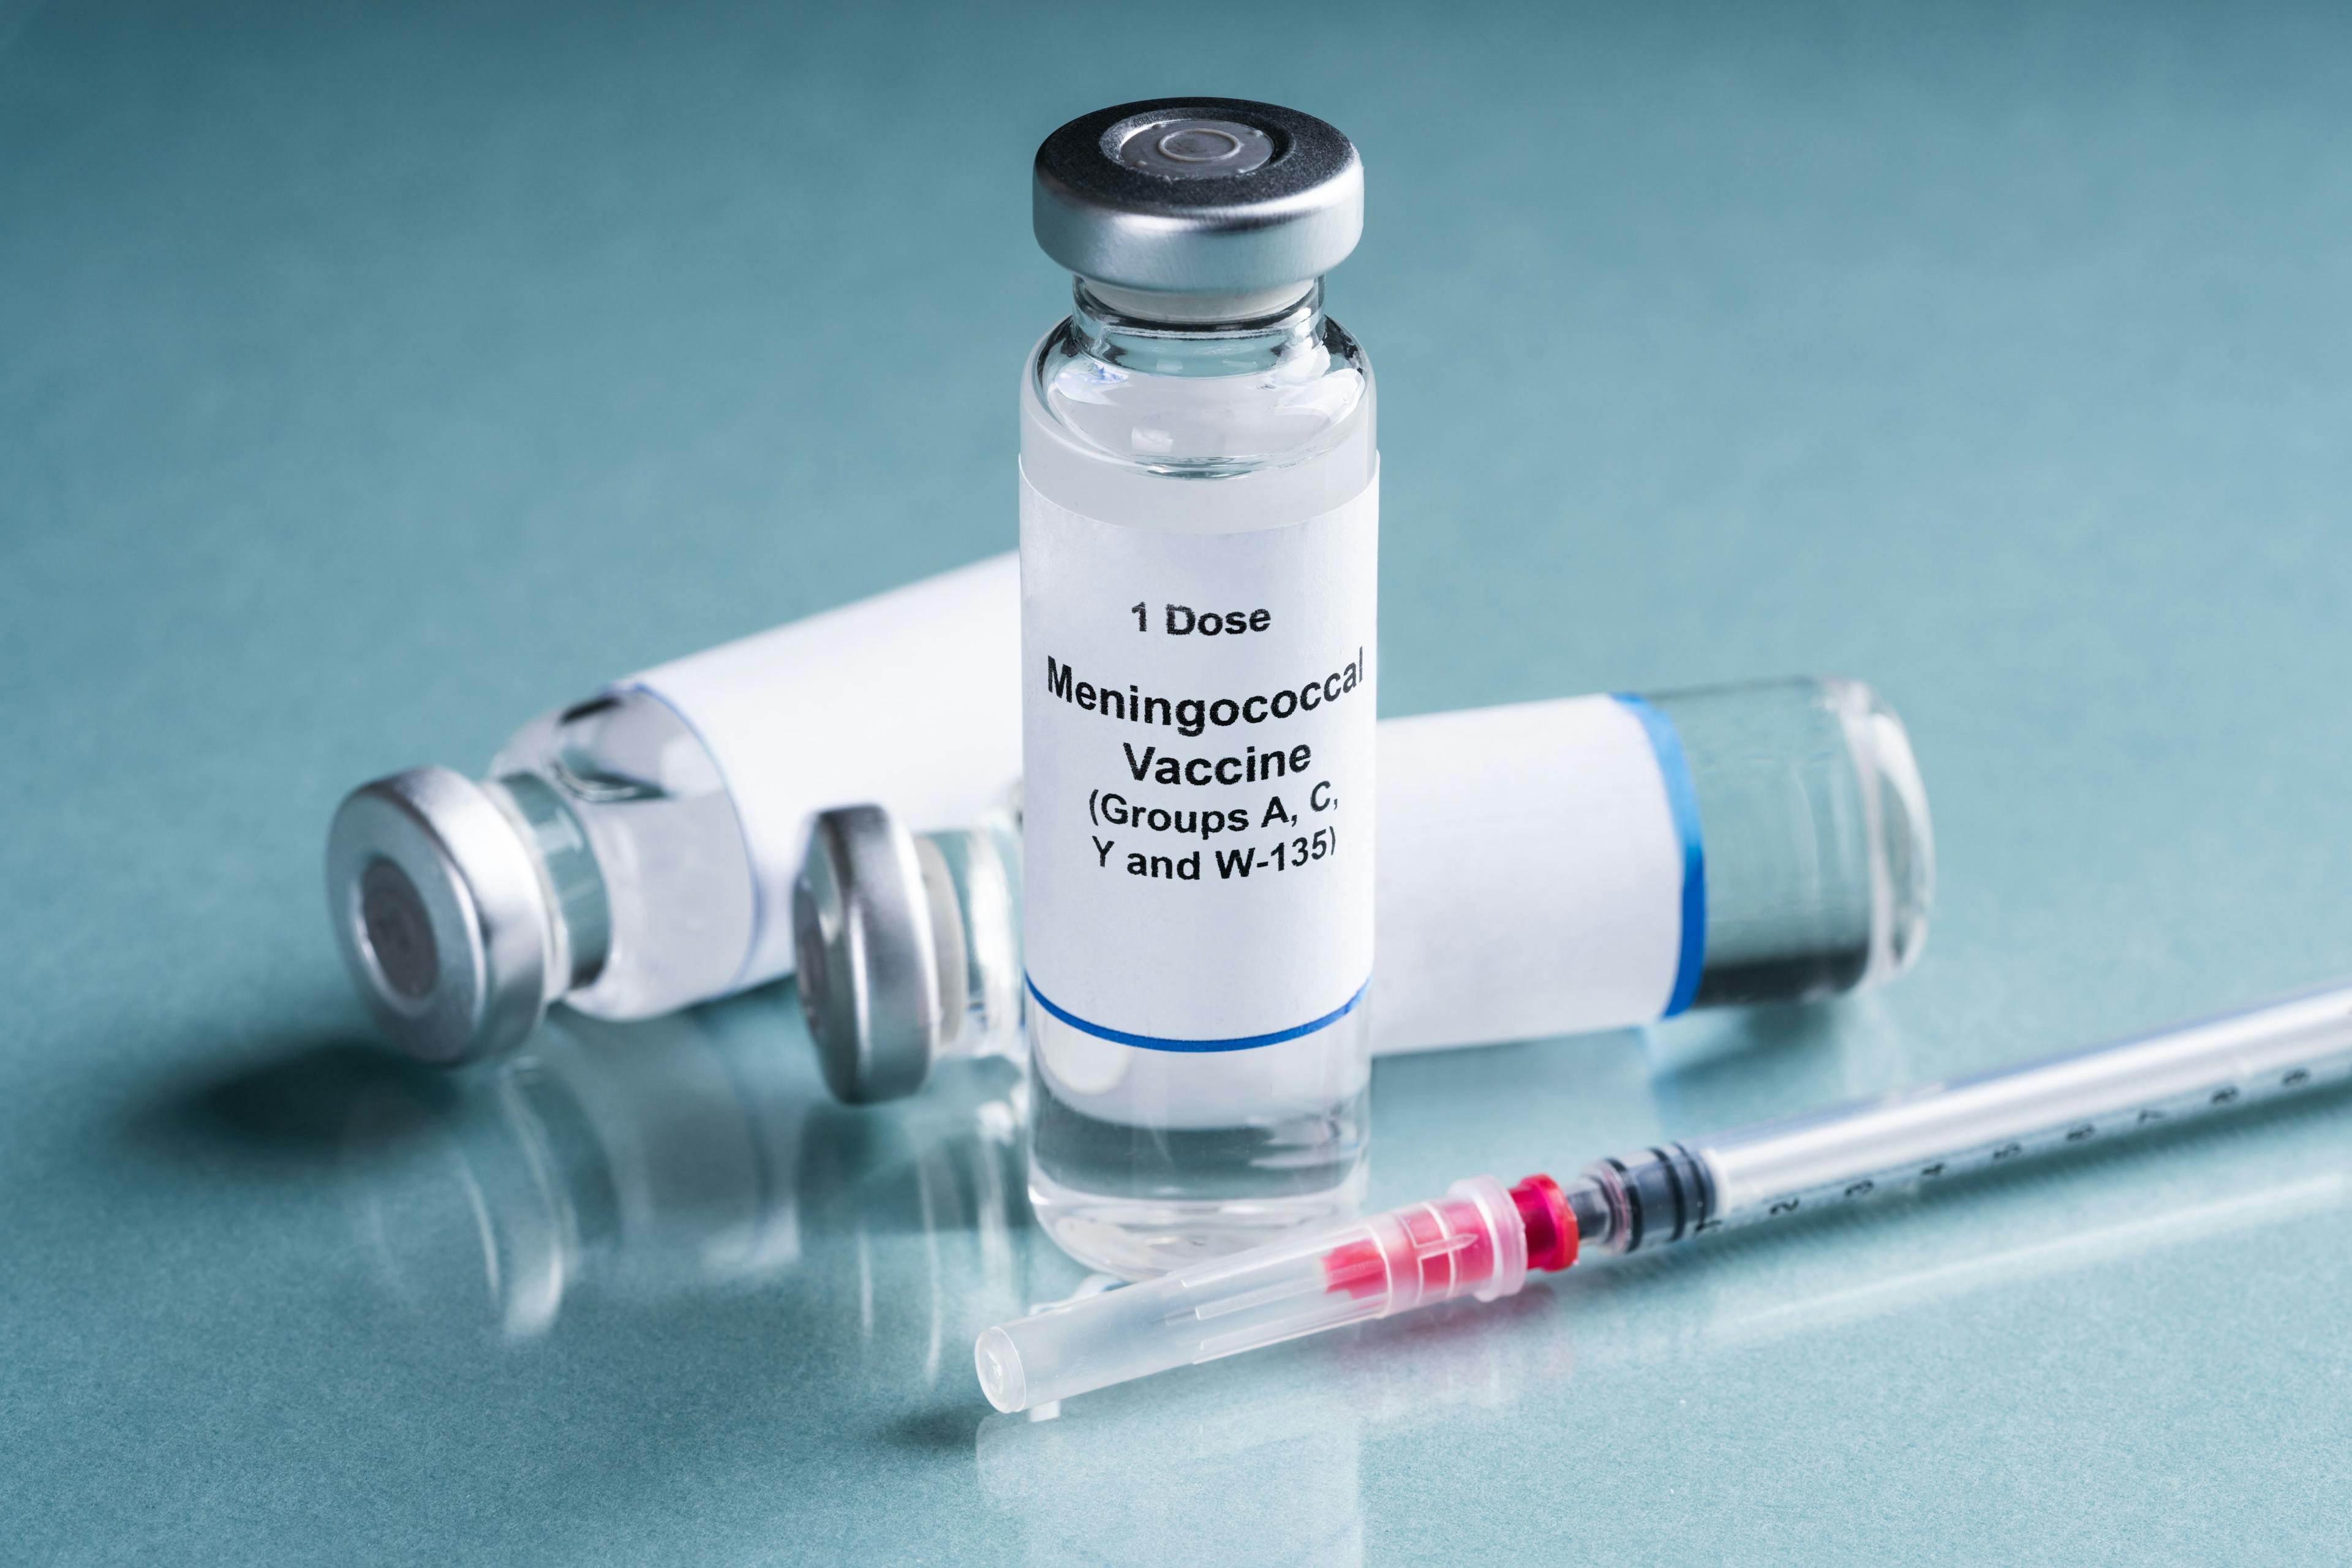 Meningococcal Vaccine In Vials With Syringe | Image Credit: Andrey Popov – stock.adobe.com